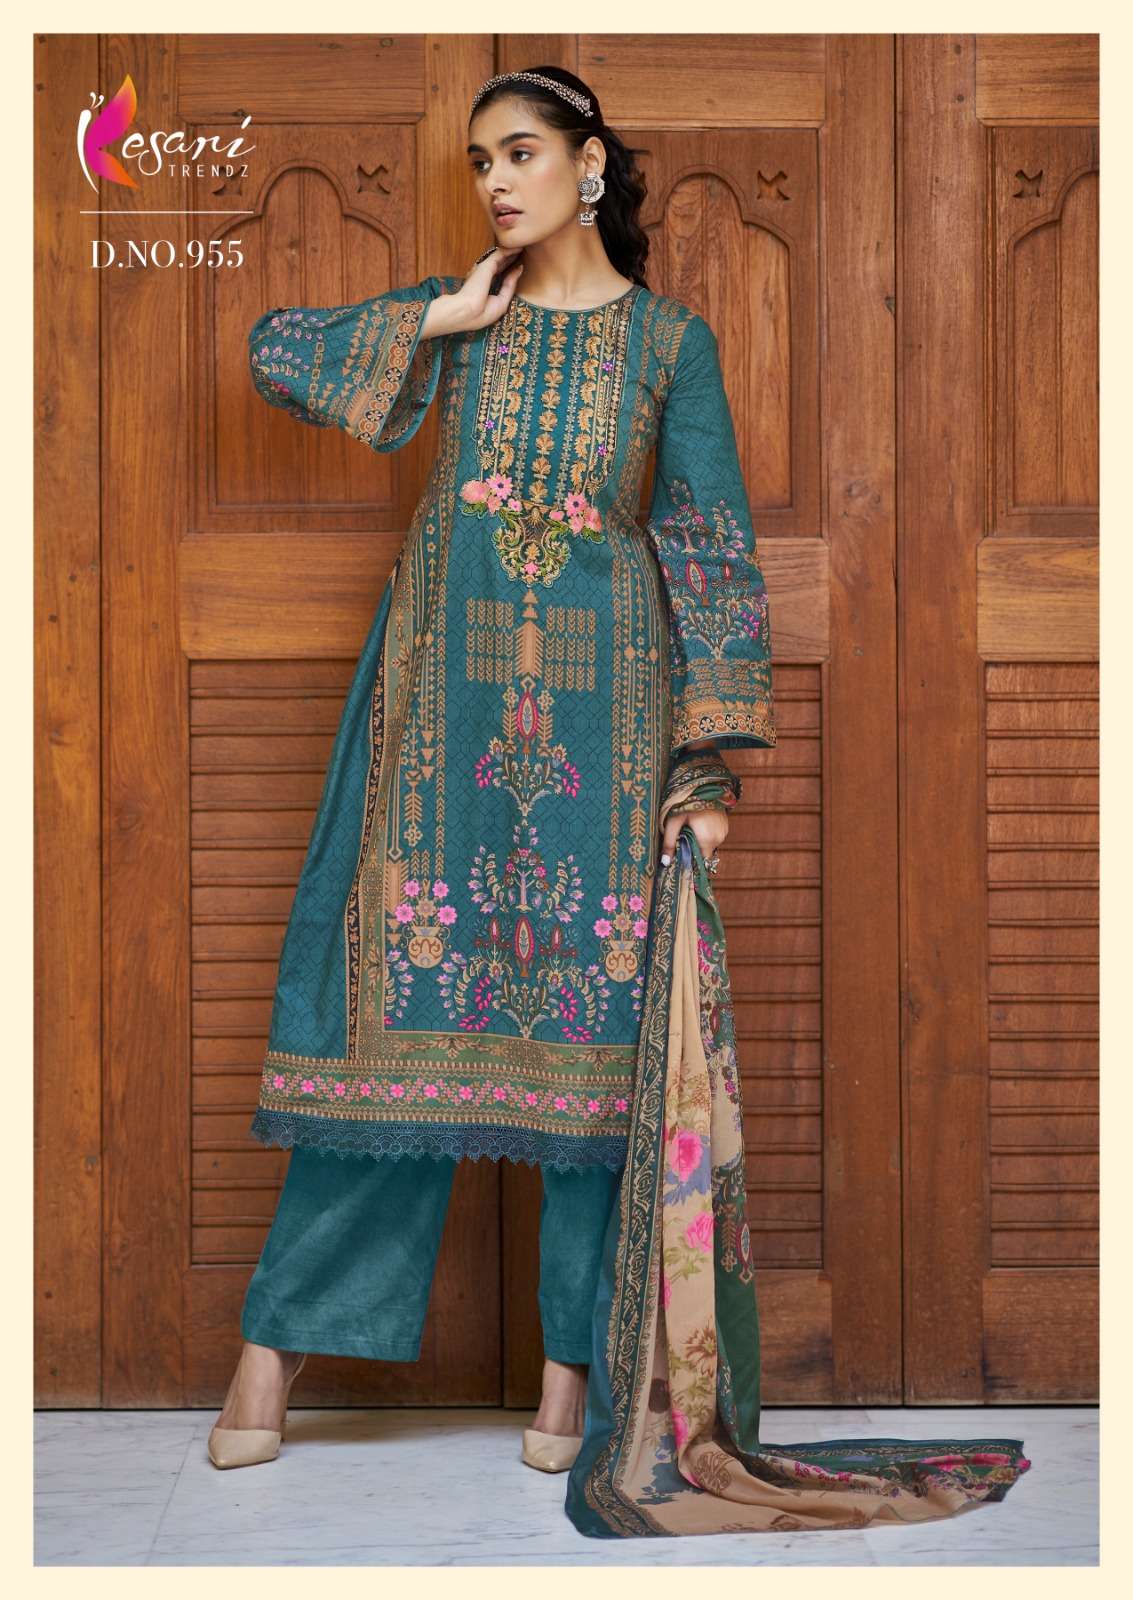 kesari trendz jannat e noor 951-958 series trendy designer salwar kameez catalogue surat 